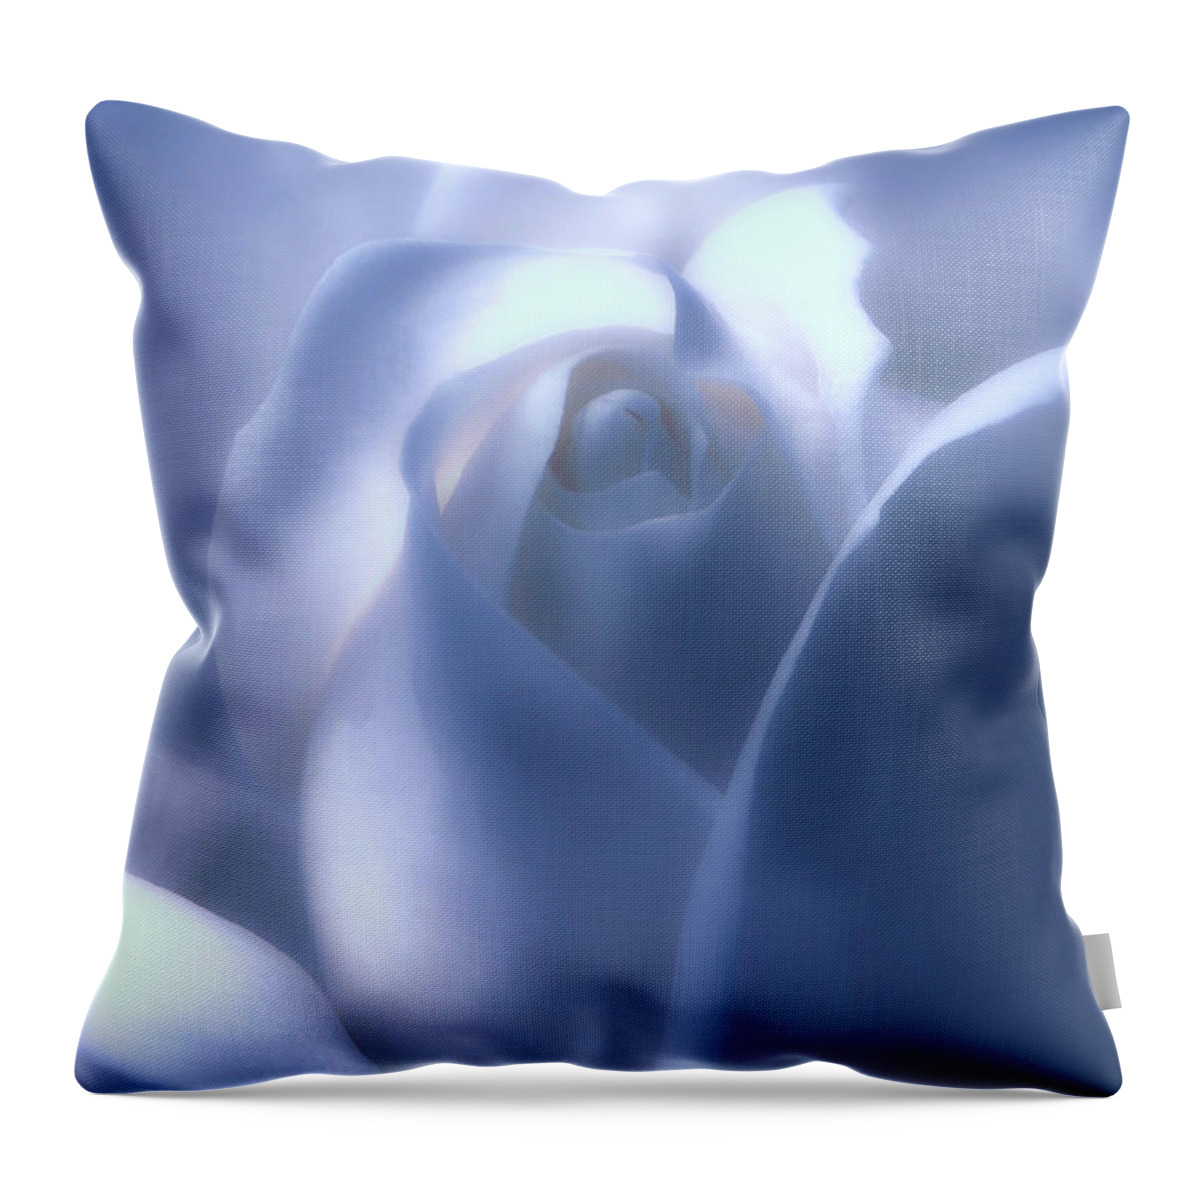 Rose Throw Pillow featuring the photograph Light Blue Rose Macro by Johanna Hurmerinta